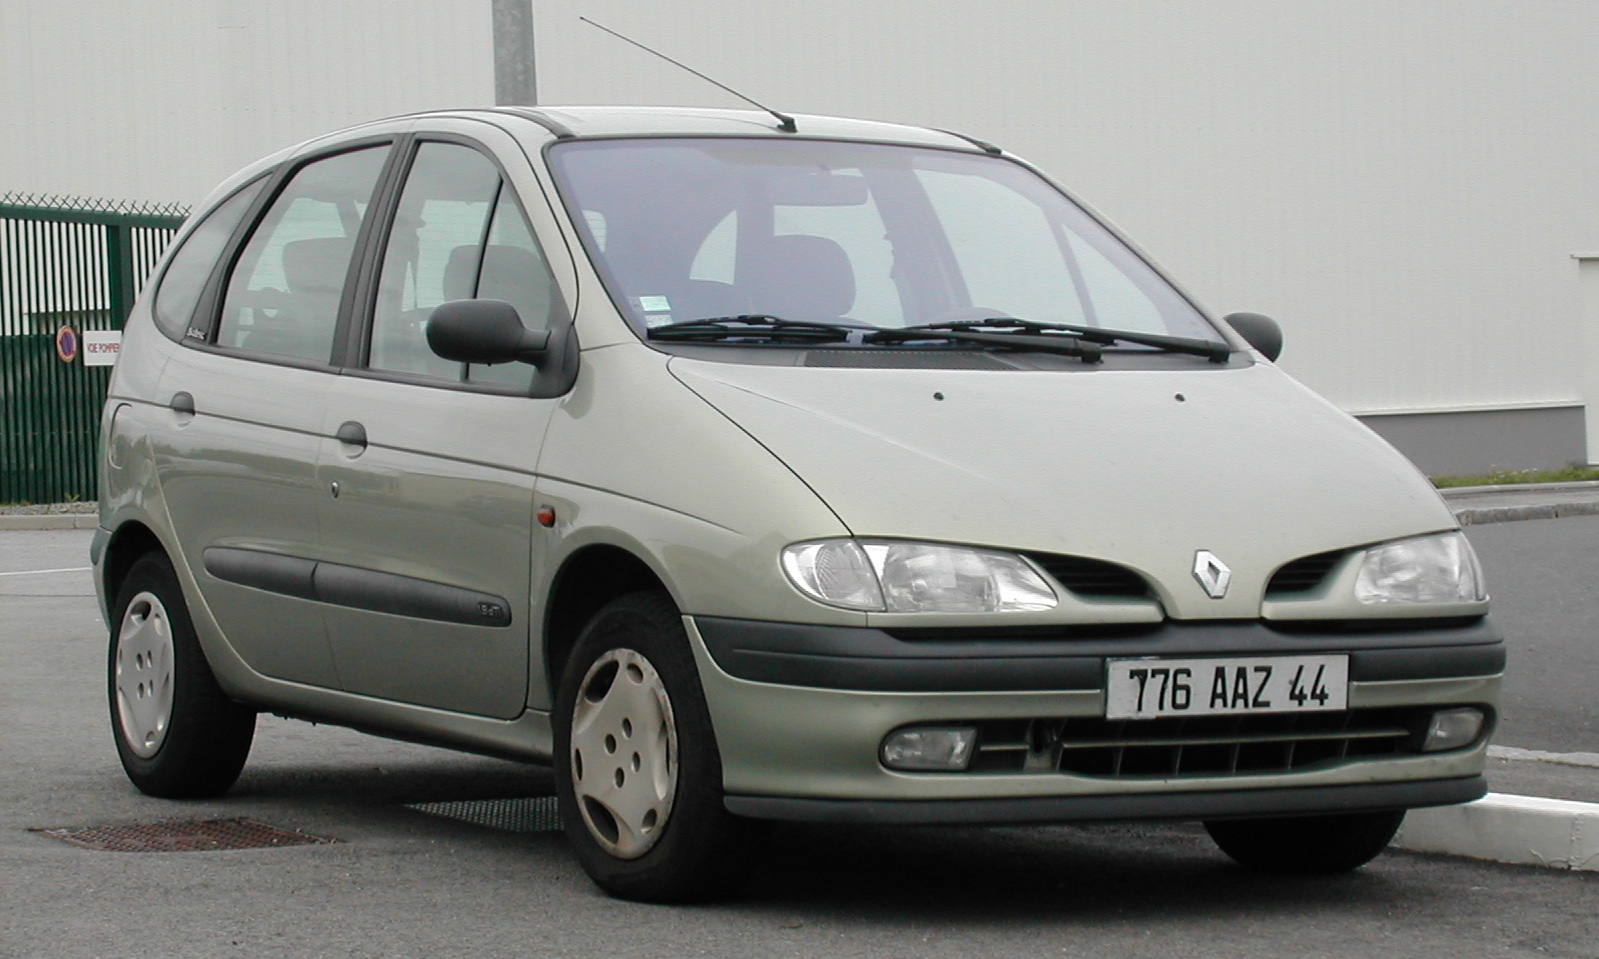 File:Renault Mégane Scénic (cropped).JPG - Wikipedia